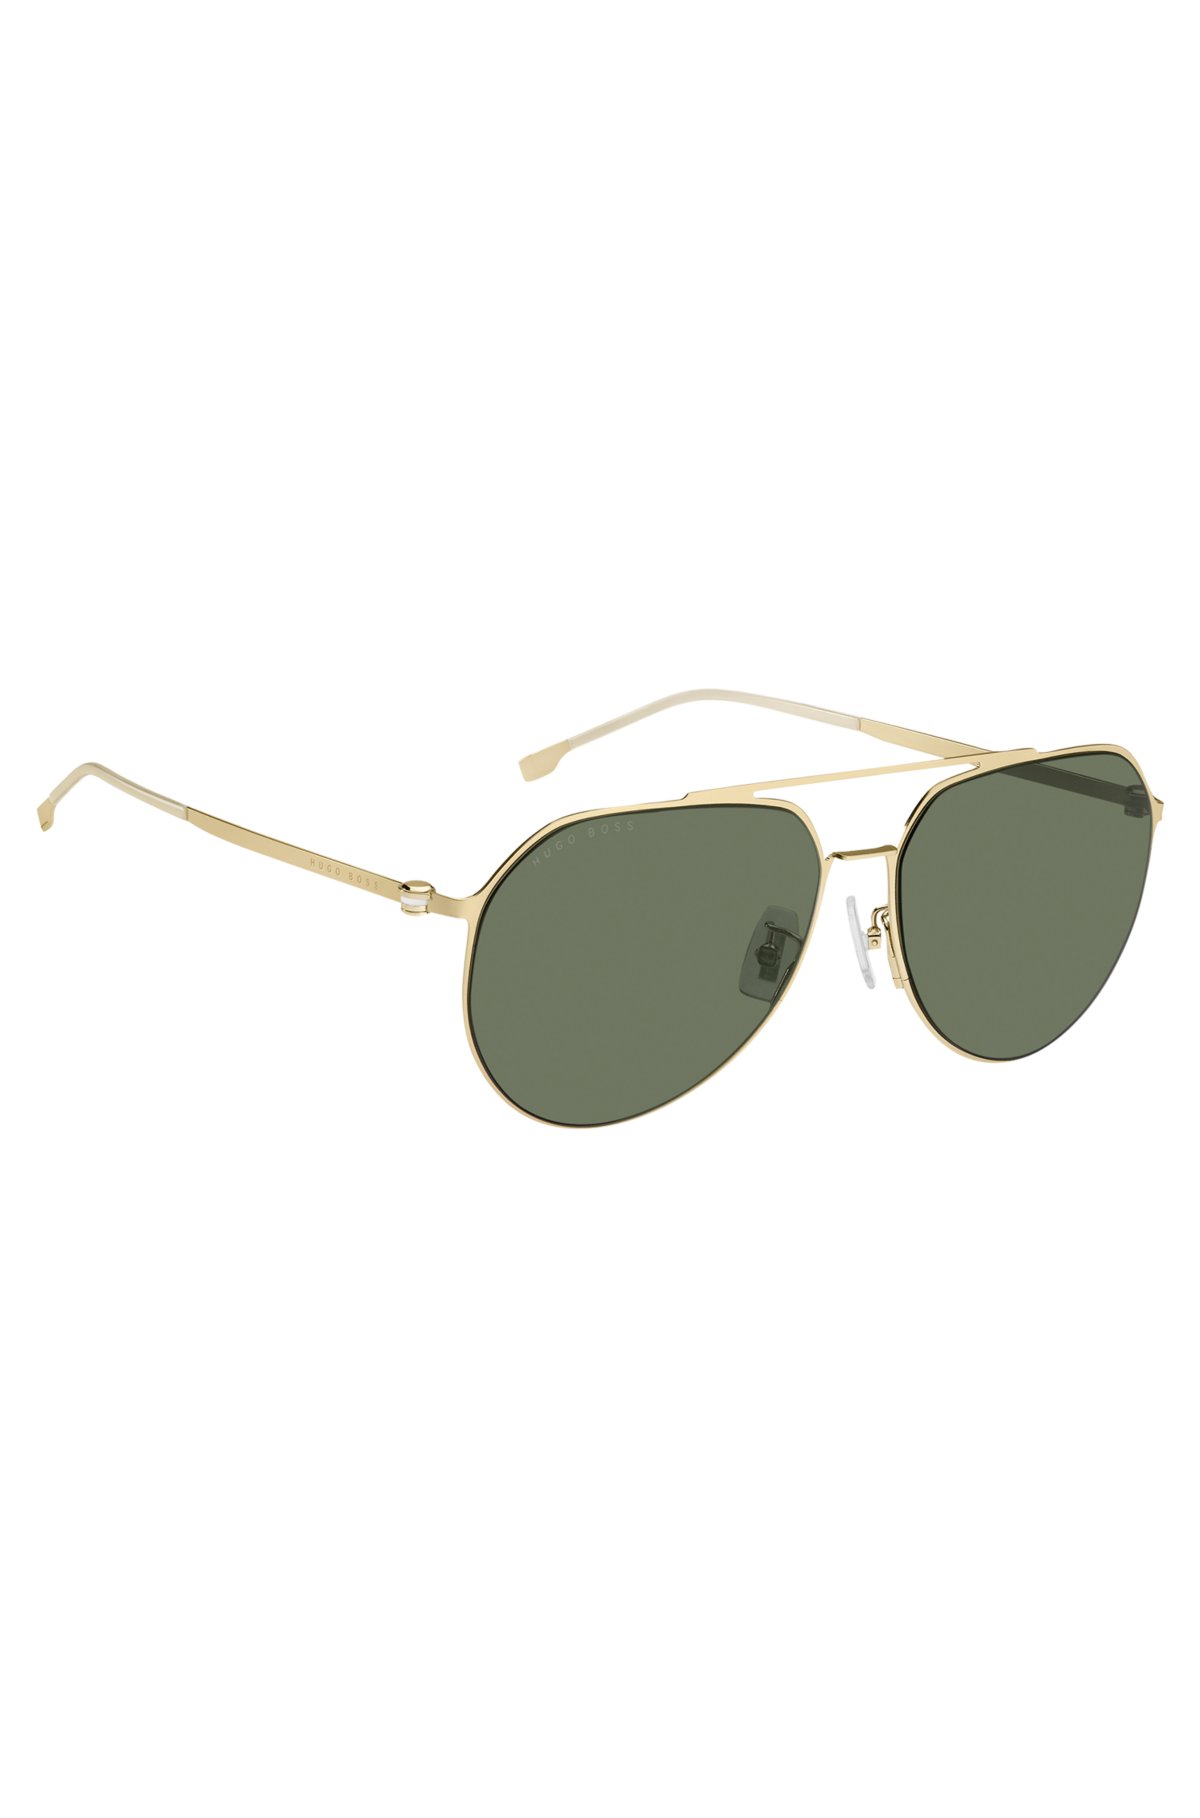 BOSS - Double-bridge sunglasses in gold-tone metal